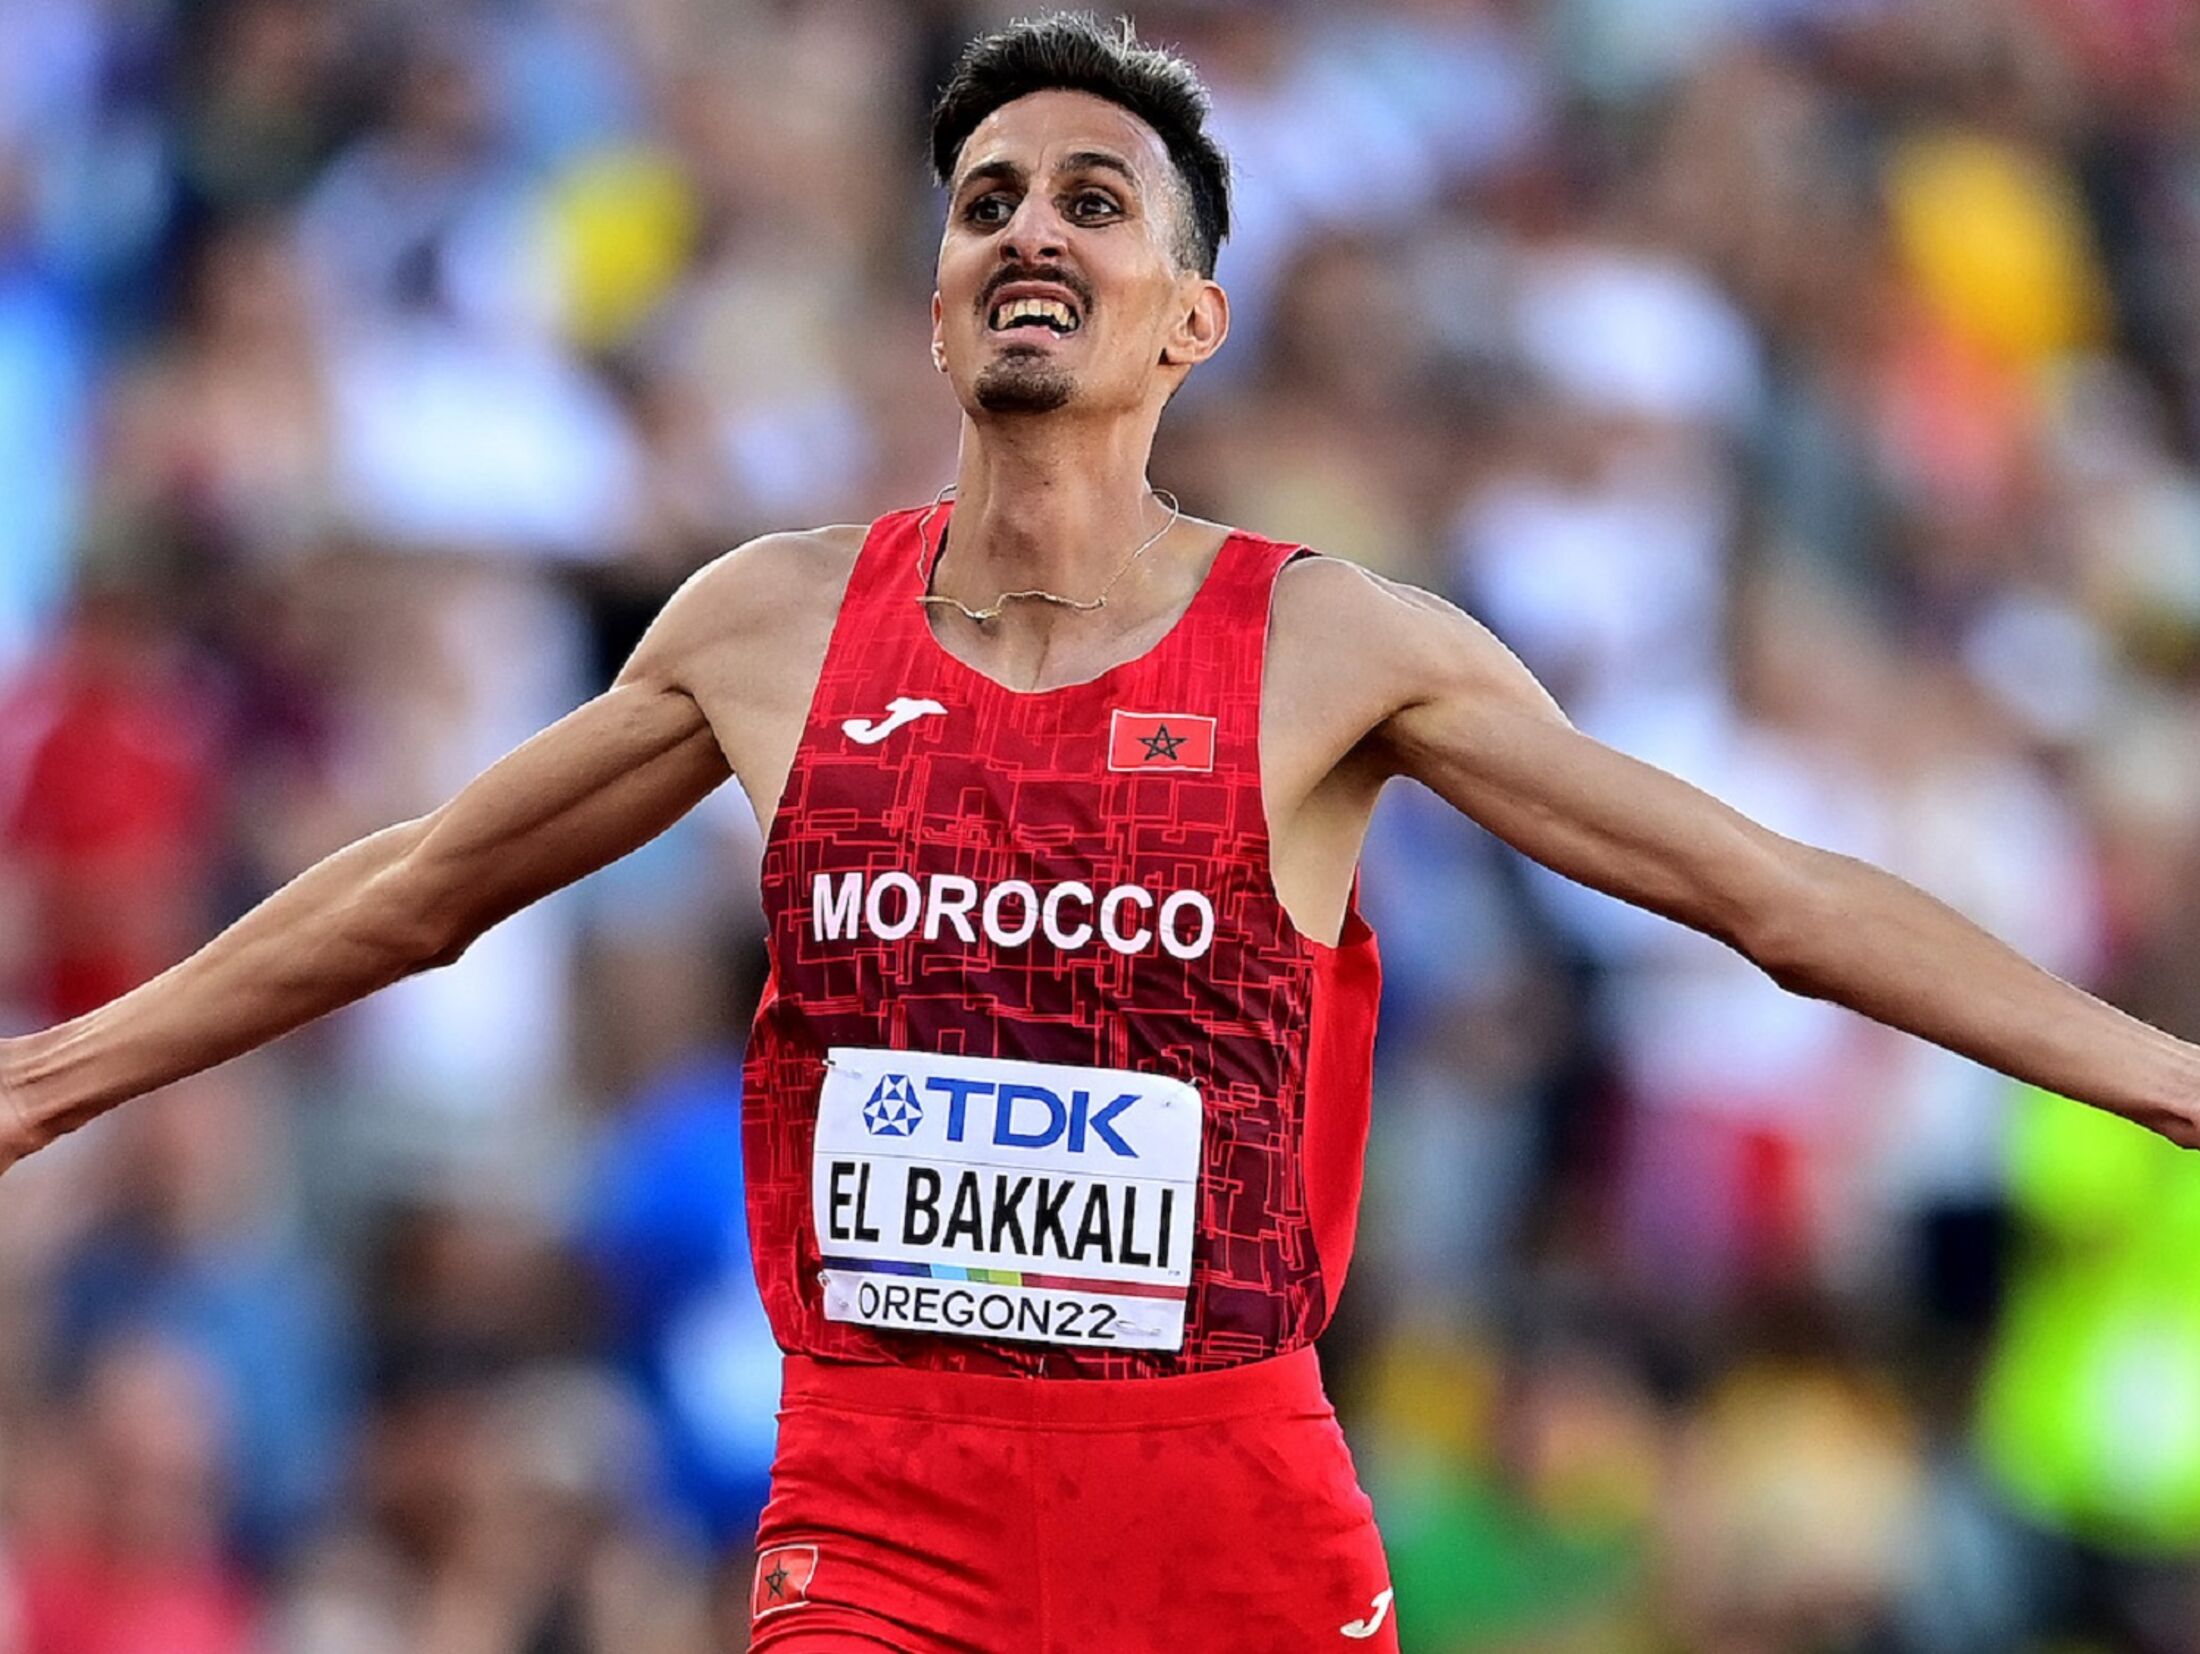 Leichtathletik-WM 2022 Soufiane El Bakkali siegt RUNNERS WORLD